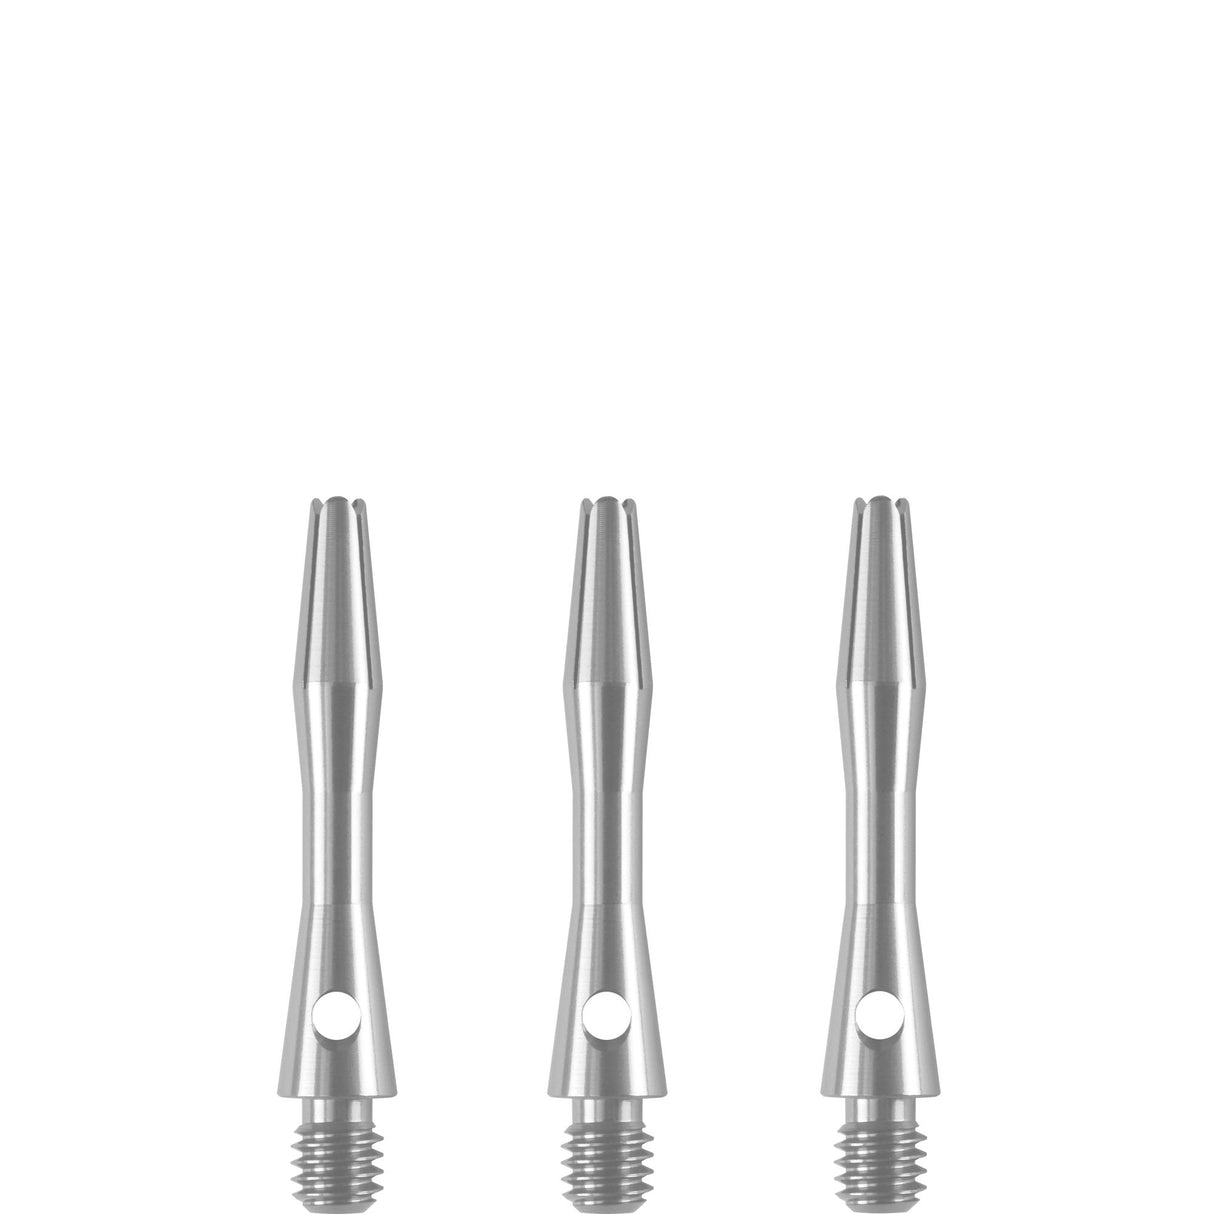 Designa Aluminium Shafts - Metal Dart Stems - Silver Extra Short